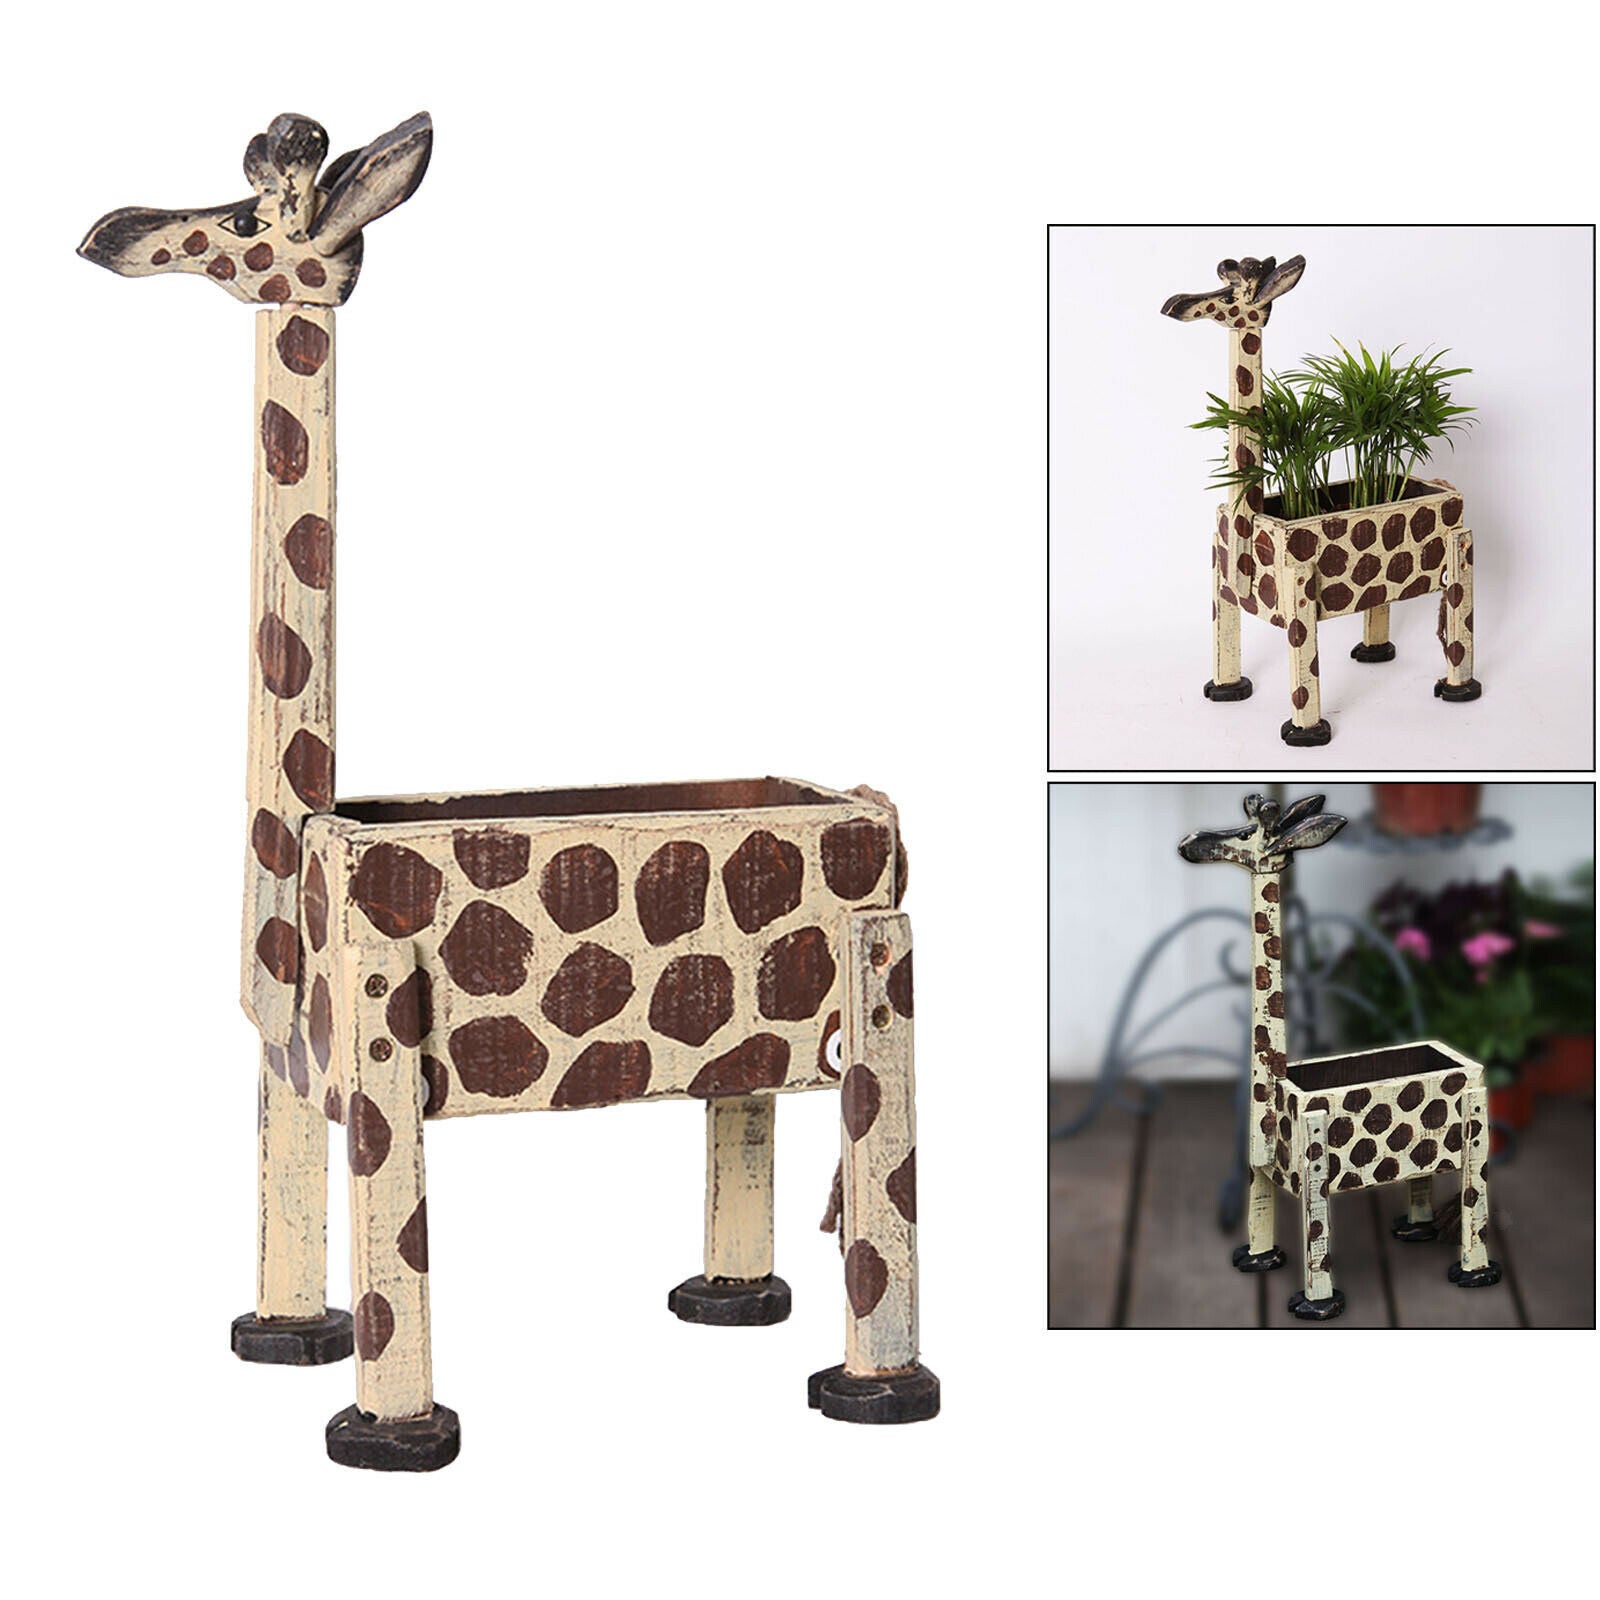 Wooden Giraffe Succulent Pots Decoration Planter for Bonsai Home Wedding